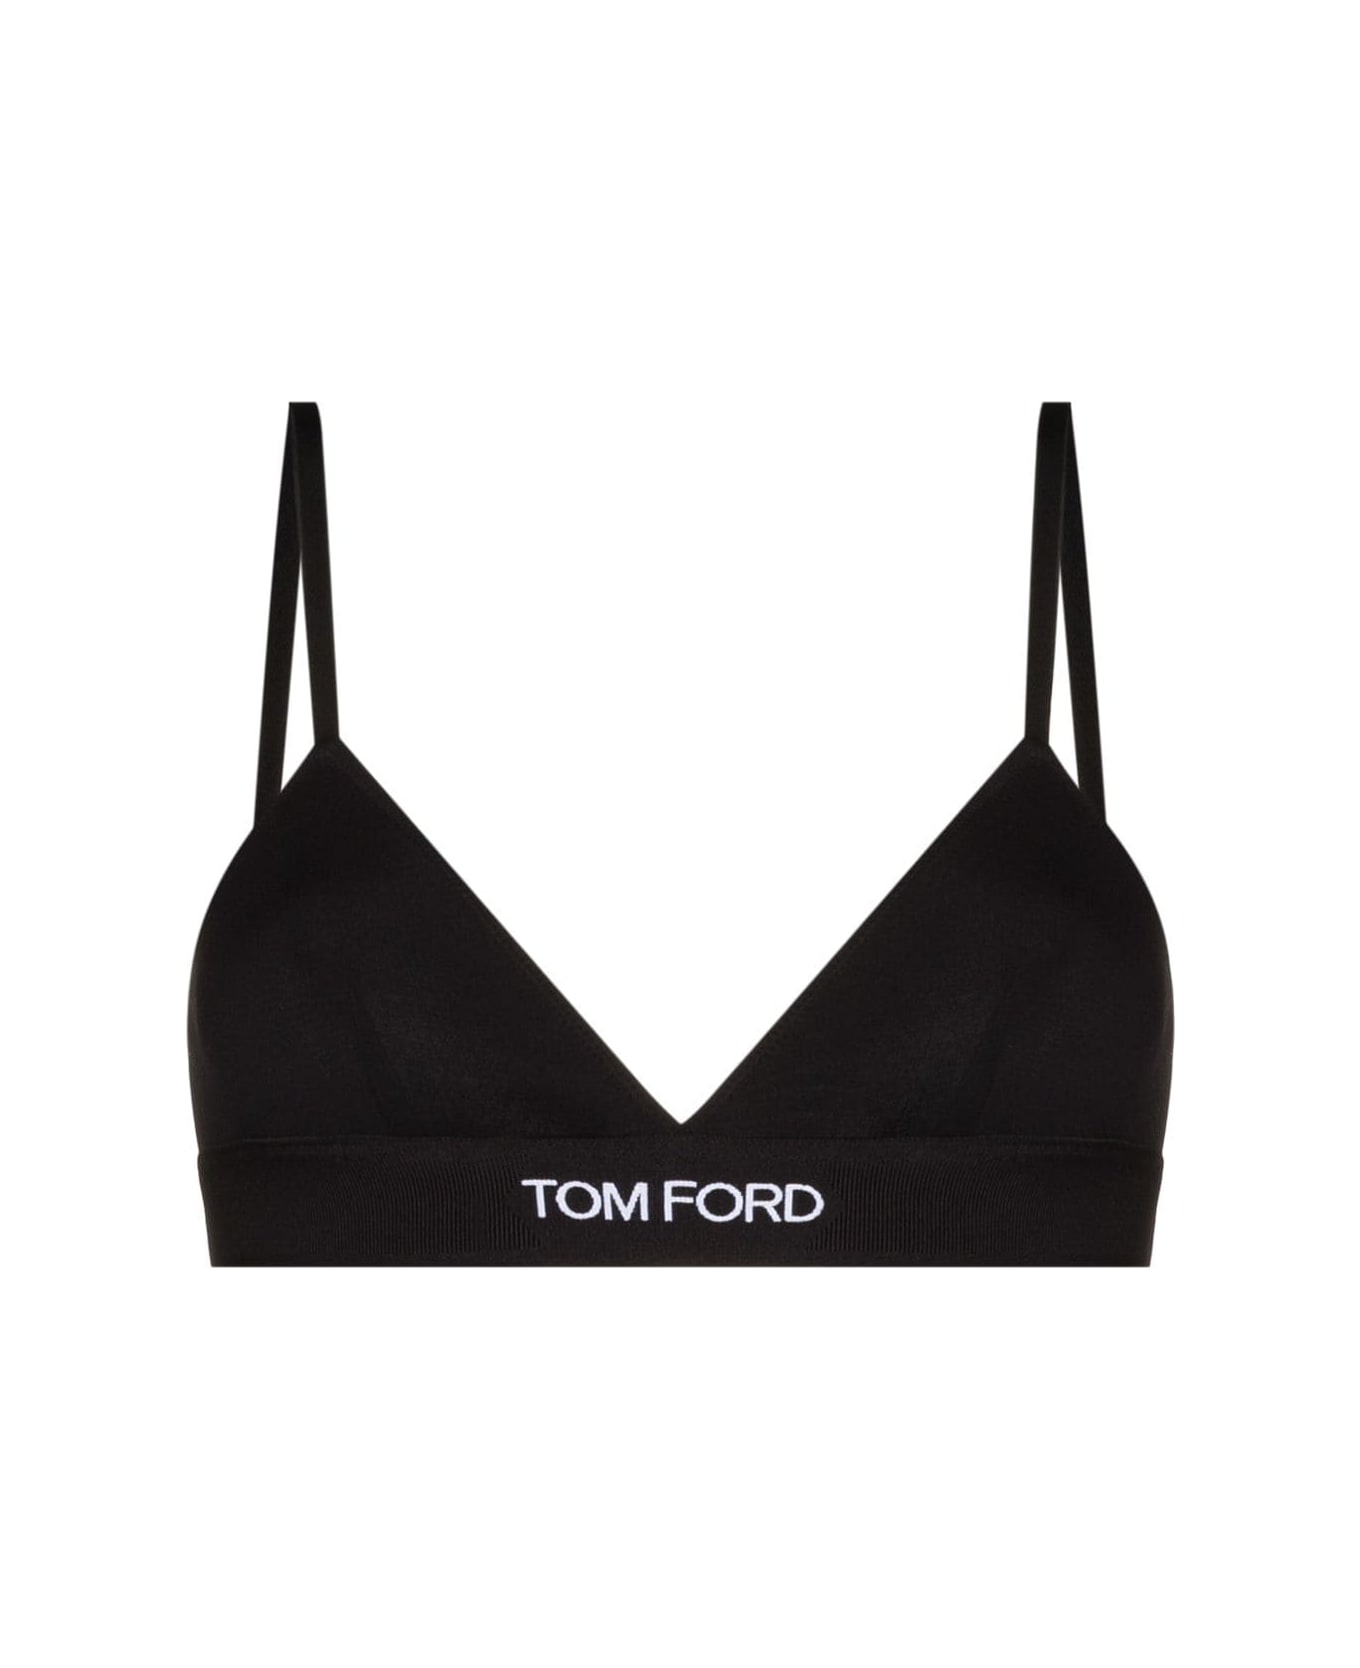 Tom Ford Underwear Bra - Black